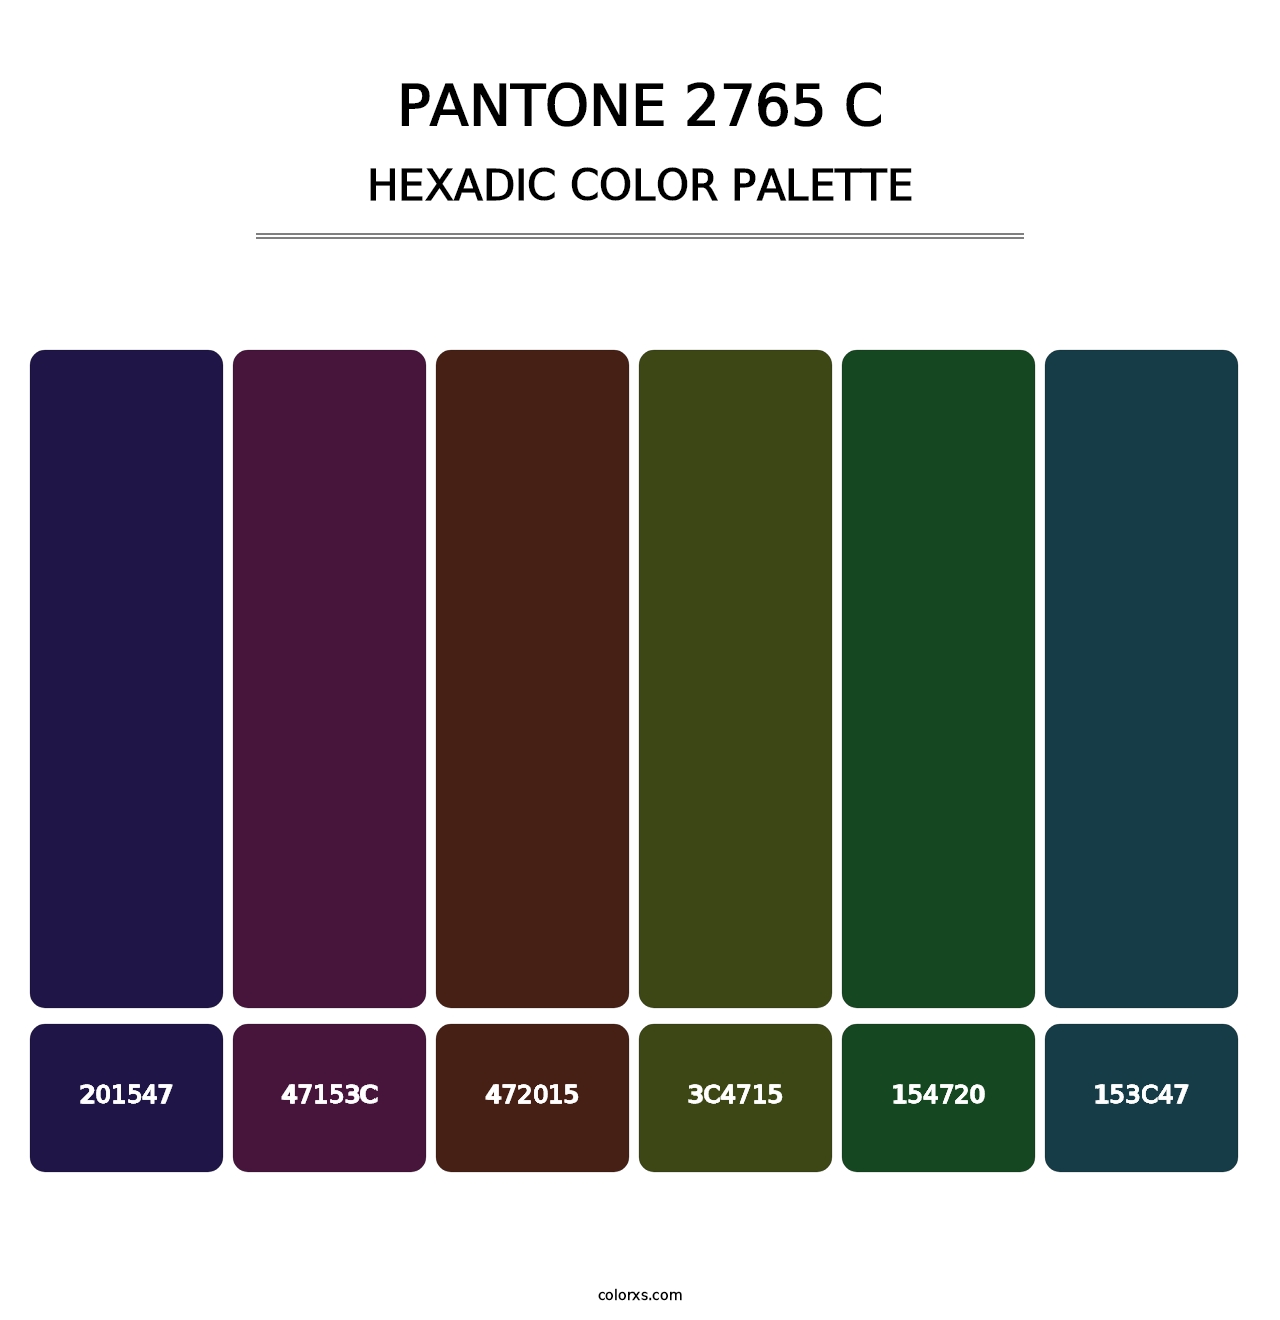 PANTONE 2765 C - Hexadic Color Palette